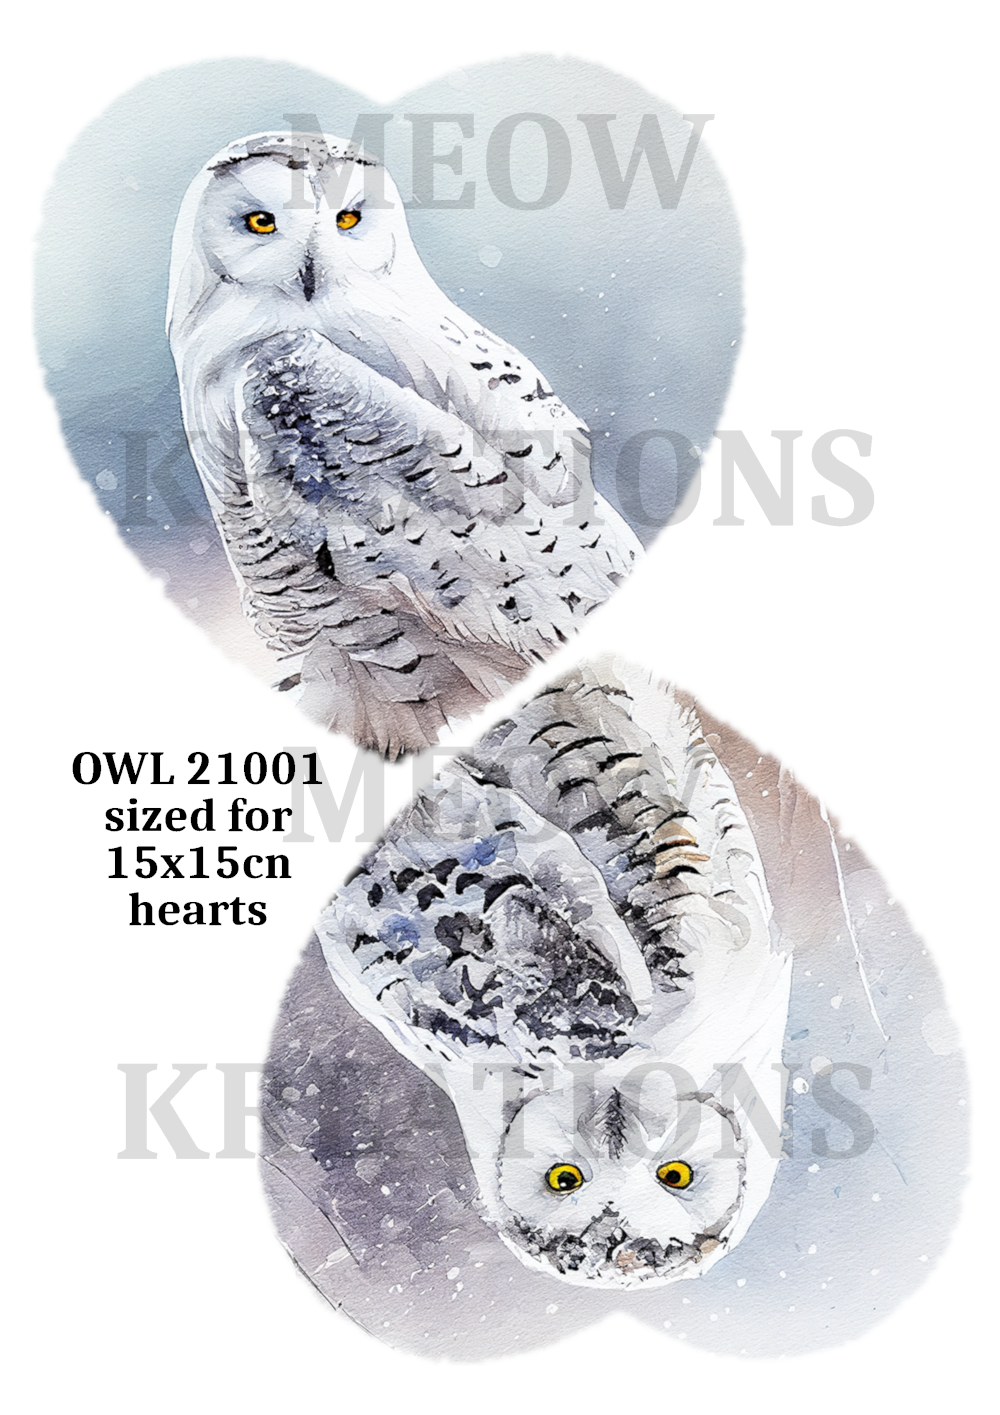 OWL 21001